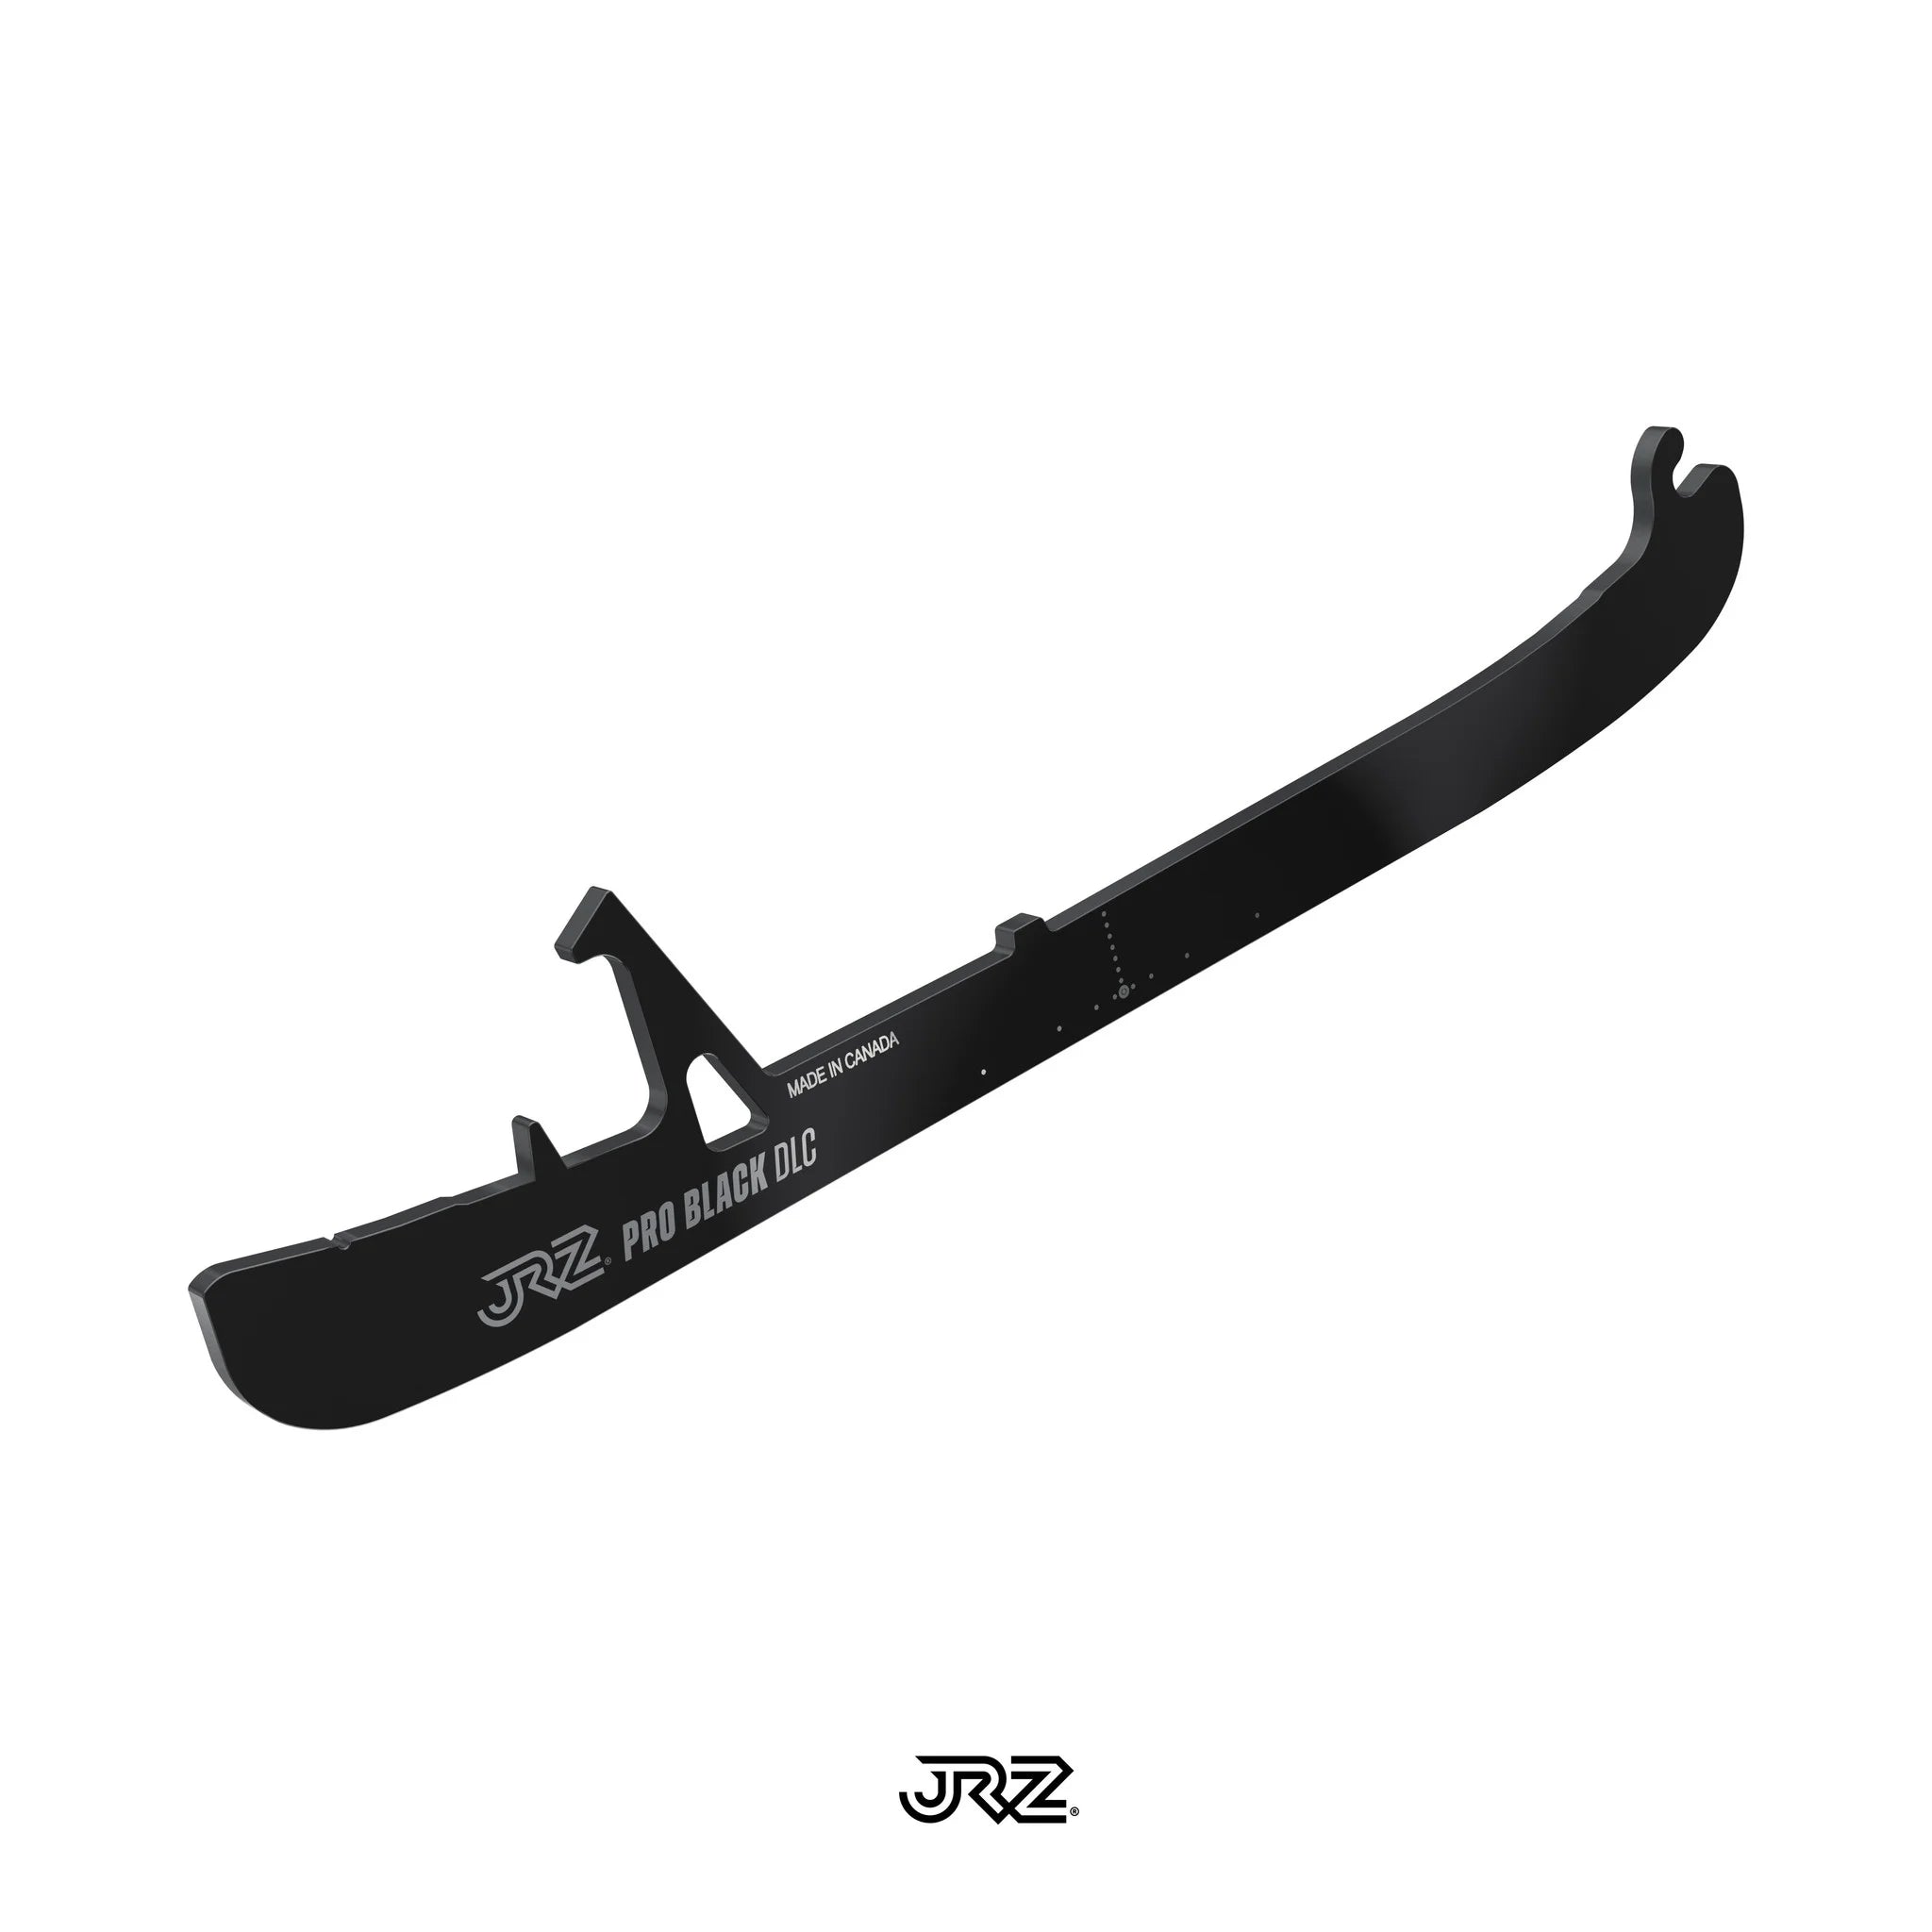 JRZ Pro Black DLC Steel - True Shift MAX - Tydan Specialty Blades Inc. (Canada)